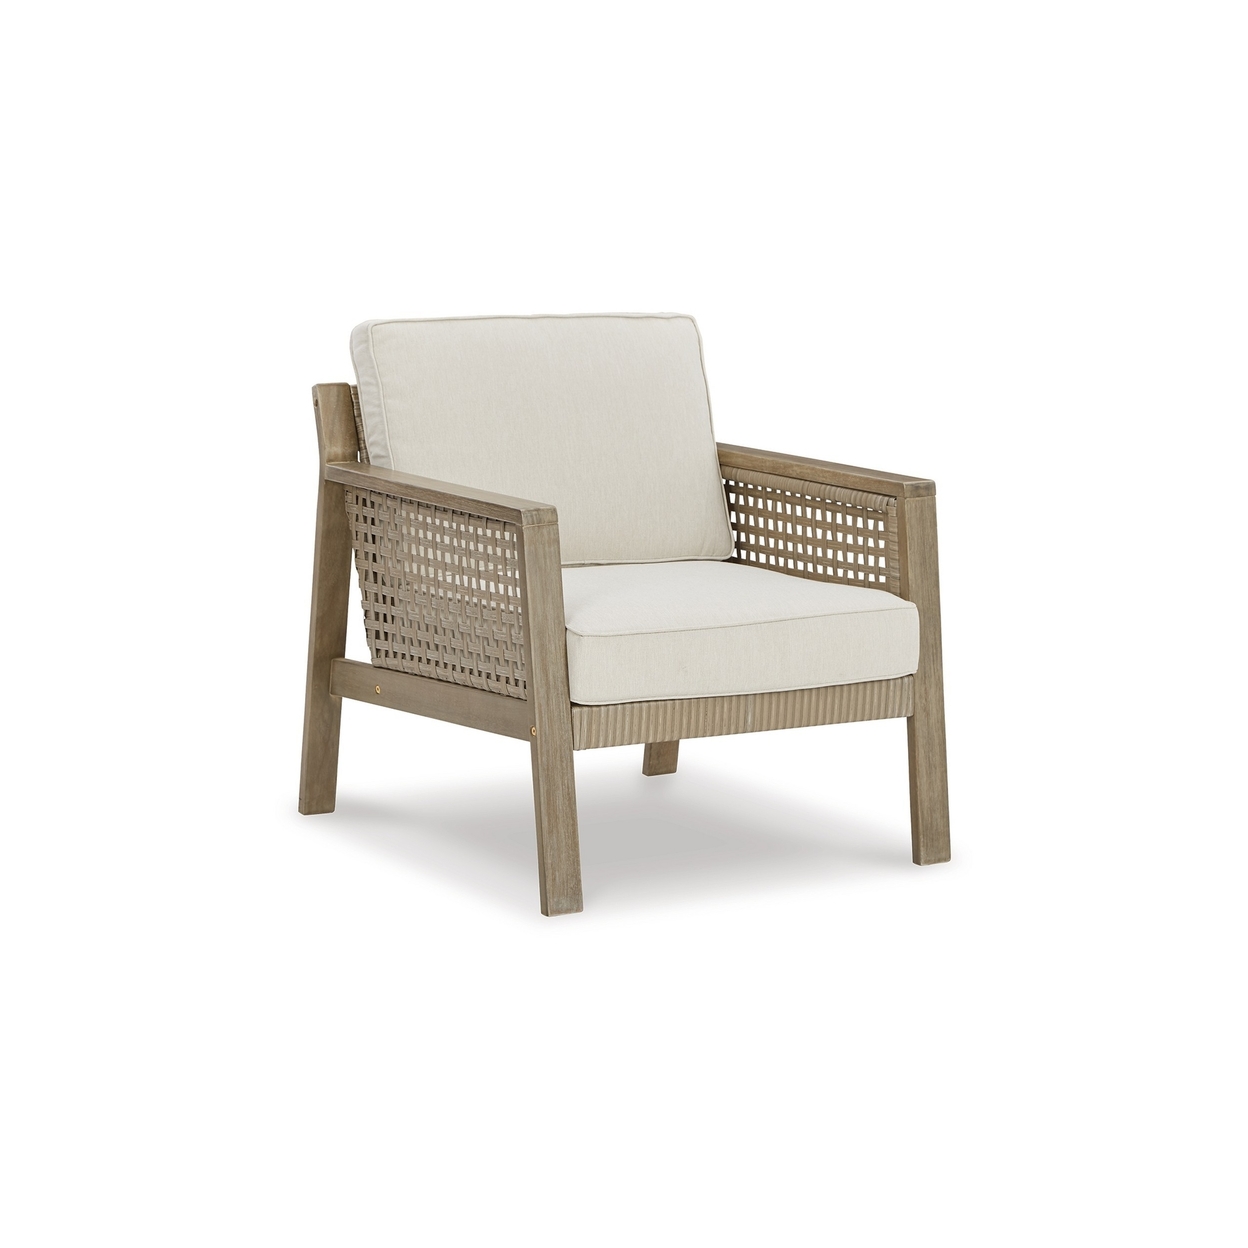 Bern 33 Inch Outdoor Lounge Chair Set Of 2, Resin Wicker, Fabric, Brown - Saltoro Sherpi